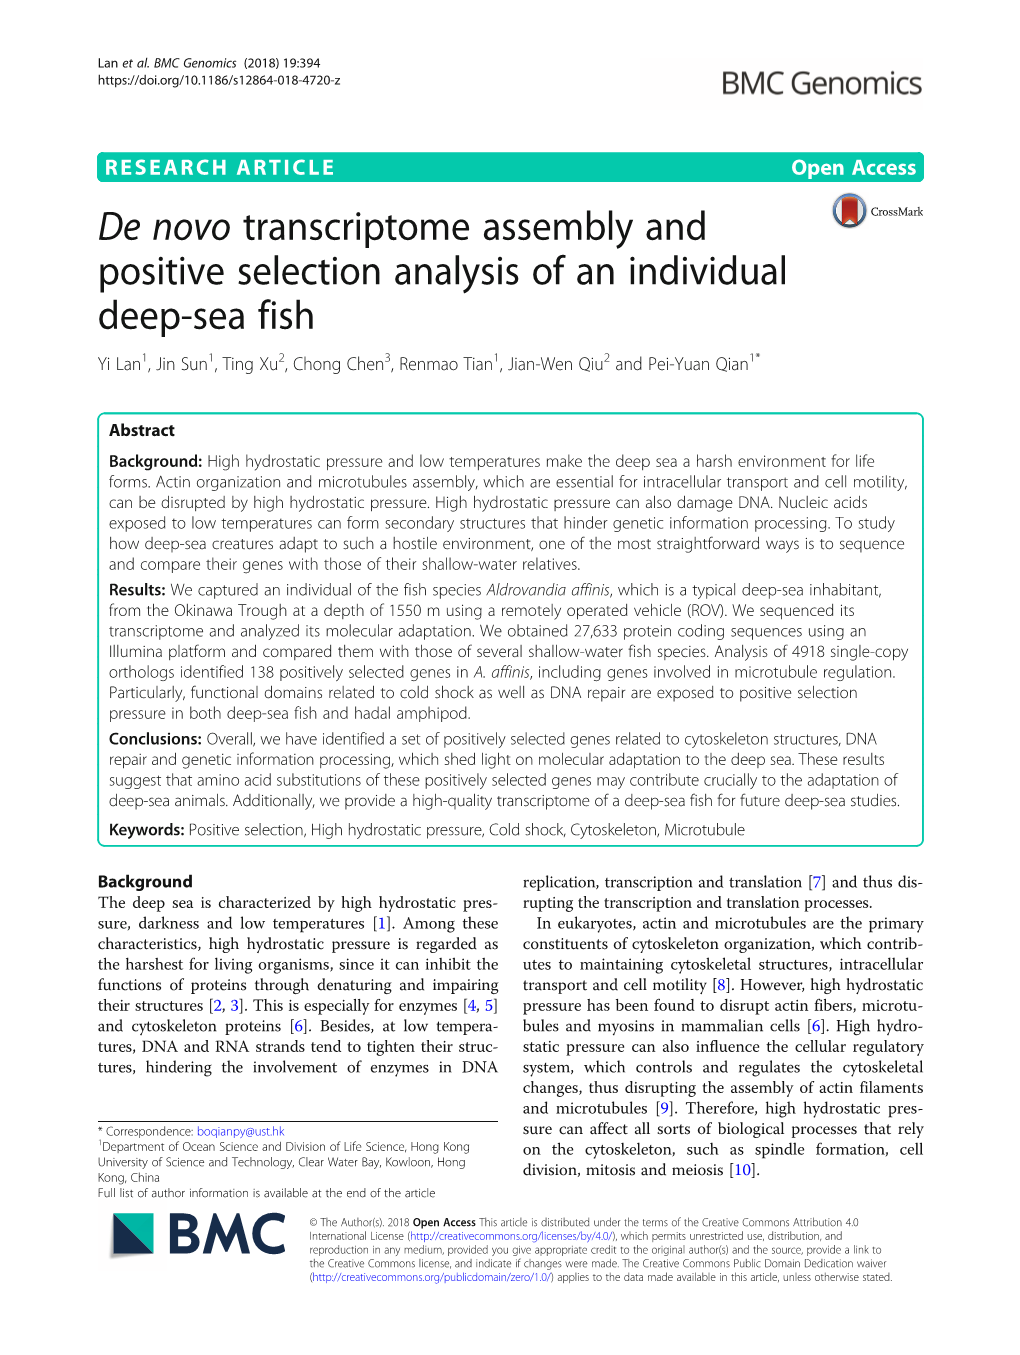 De Novo Transcriptome Assembly and Positive Selection Analysis of An